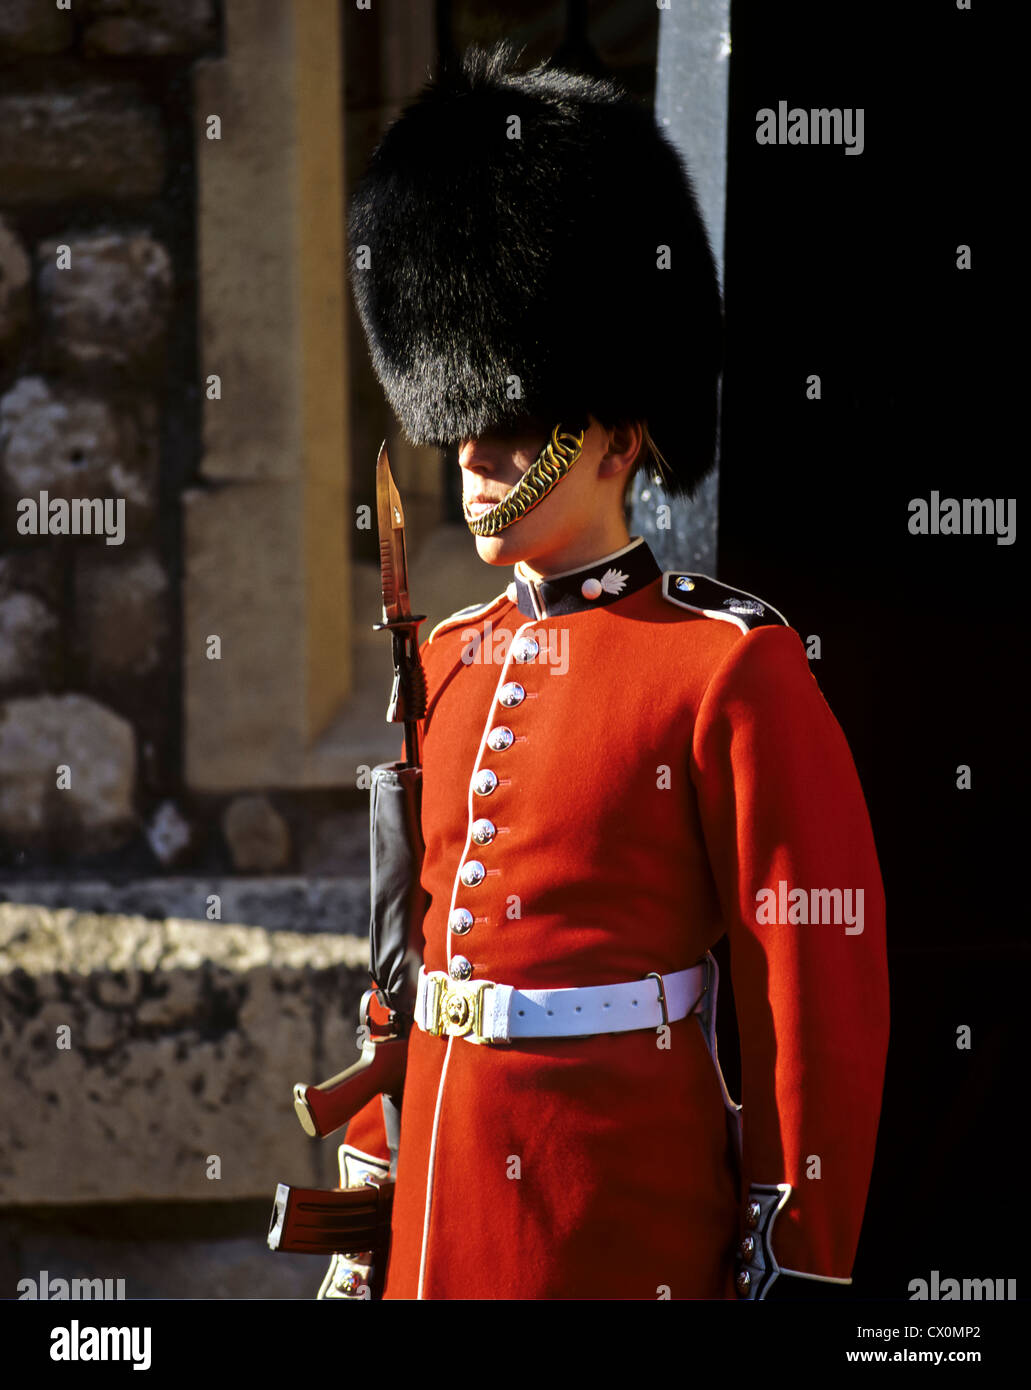 8204. Guardsman, Londres, Angleterre, Europe Banque D'Images